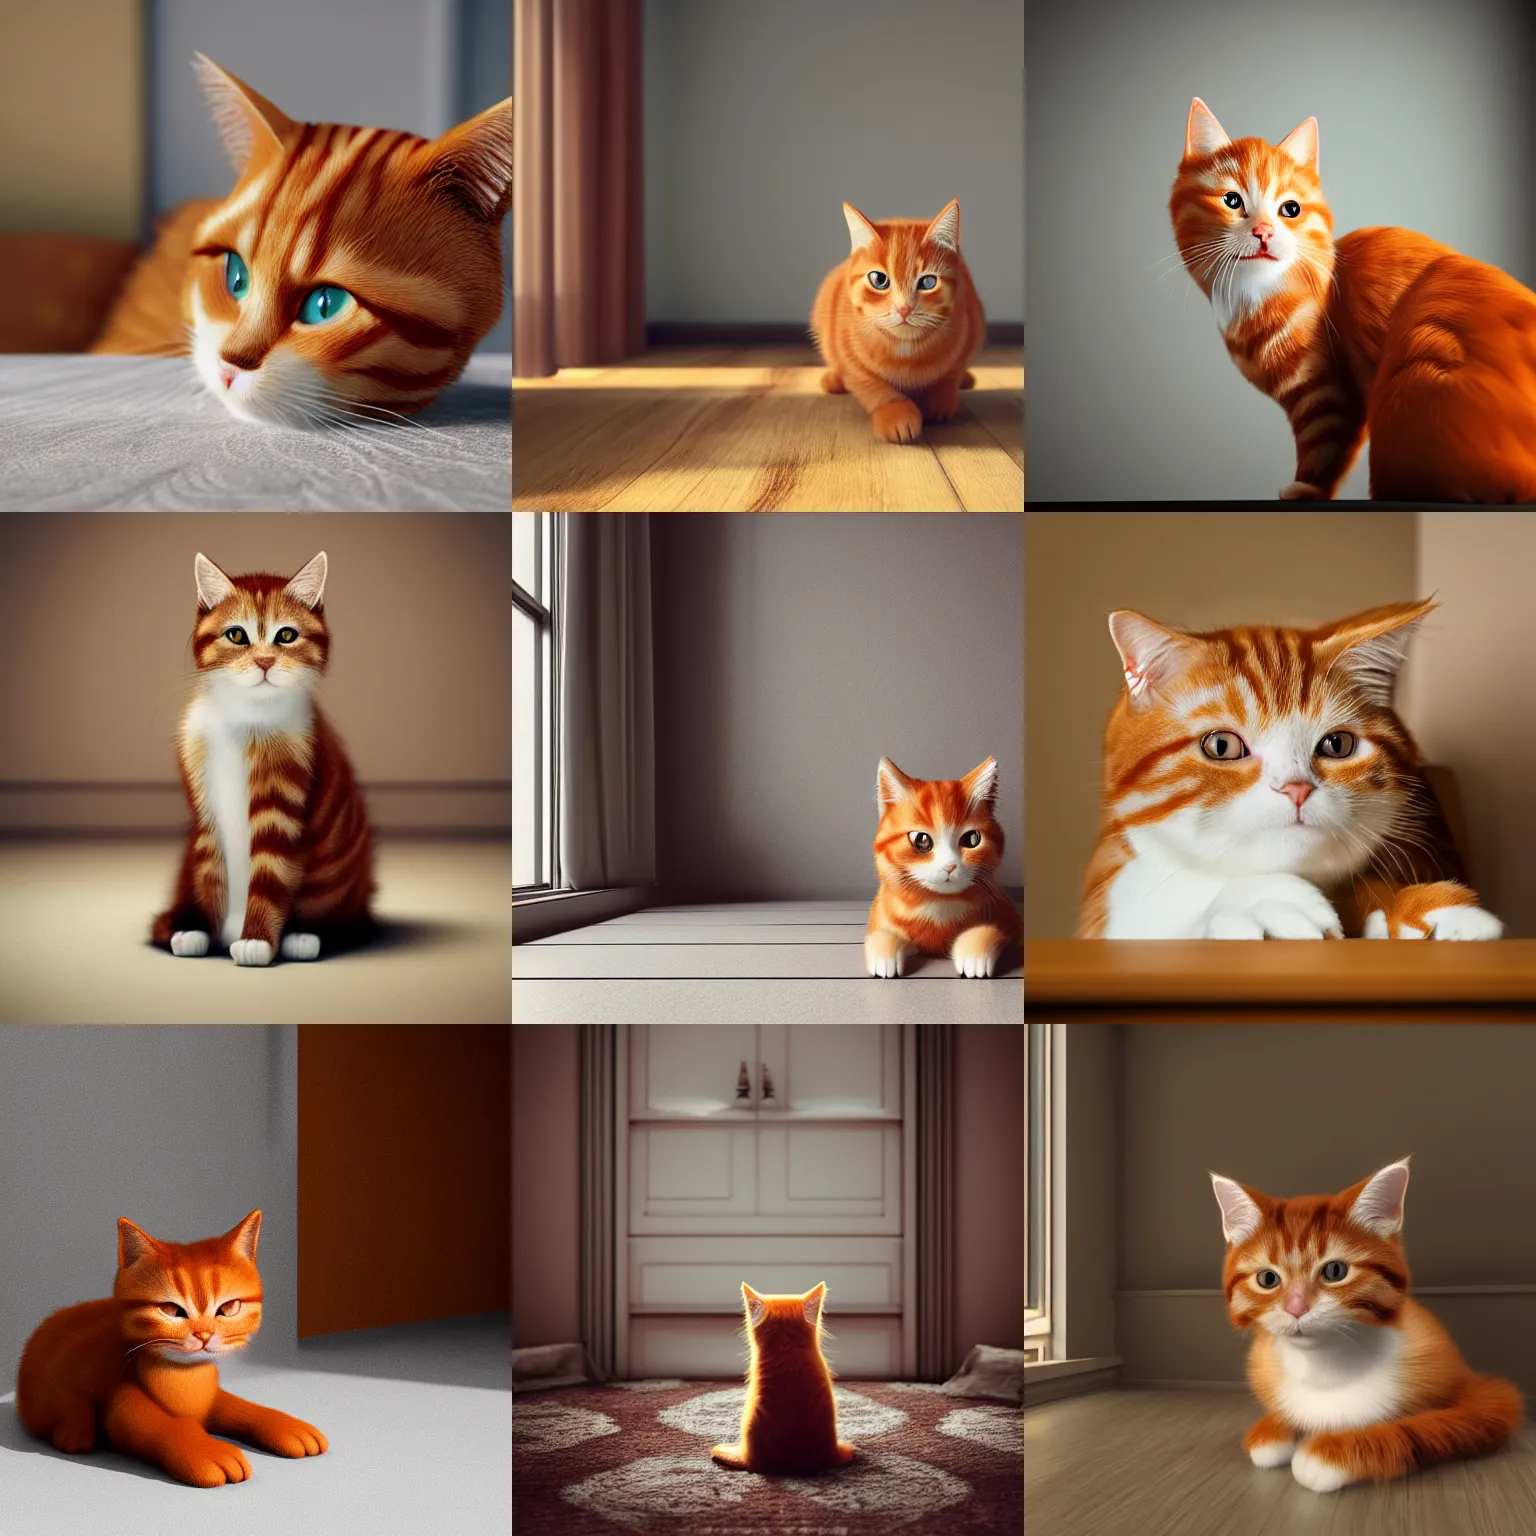 Prompt: cute ginger cat in a room, octane render